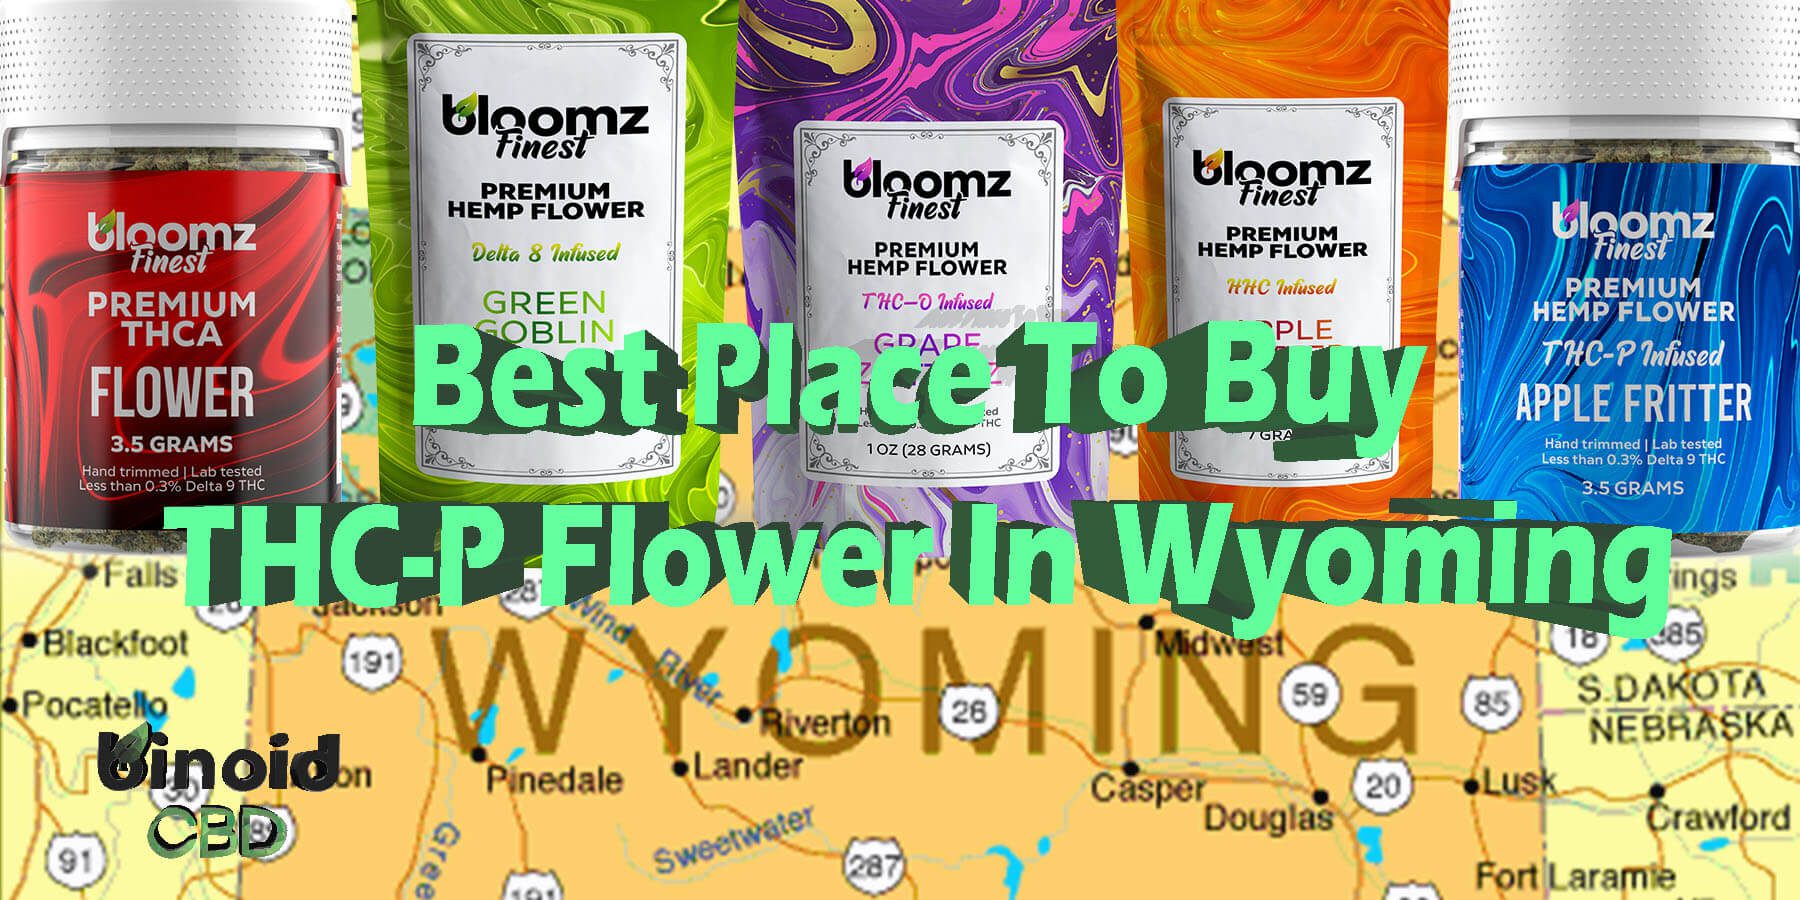 Buy THCP Hemp Flower Wyoming Get Online Near Me For Sale Best Brand Strongest Real Legal Store Shop Reddit